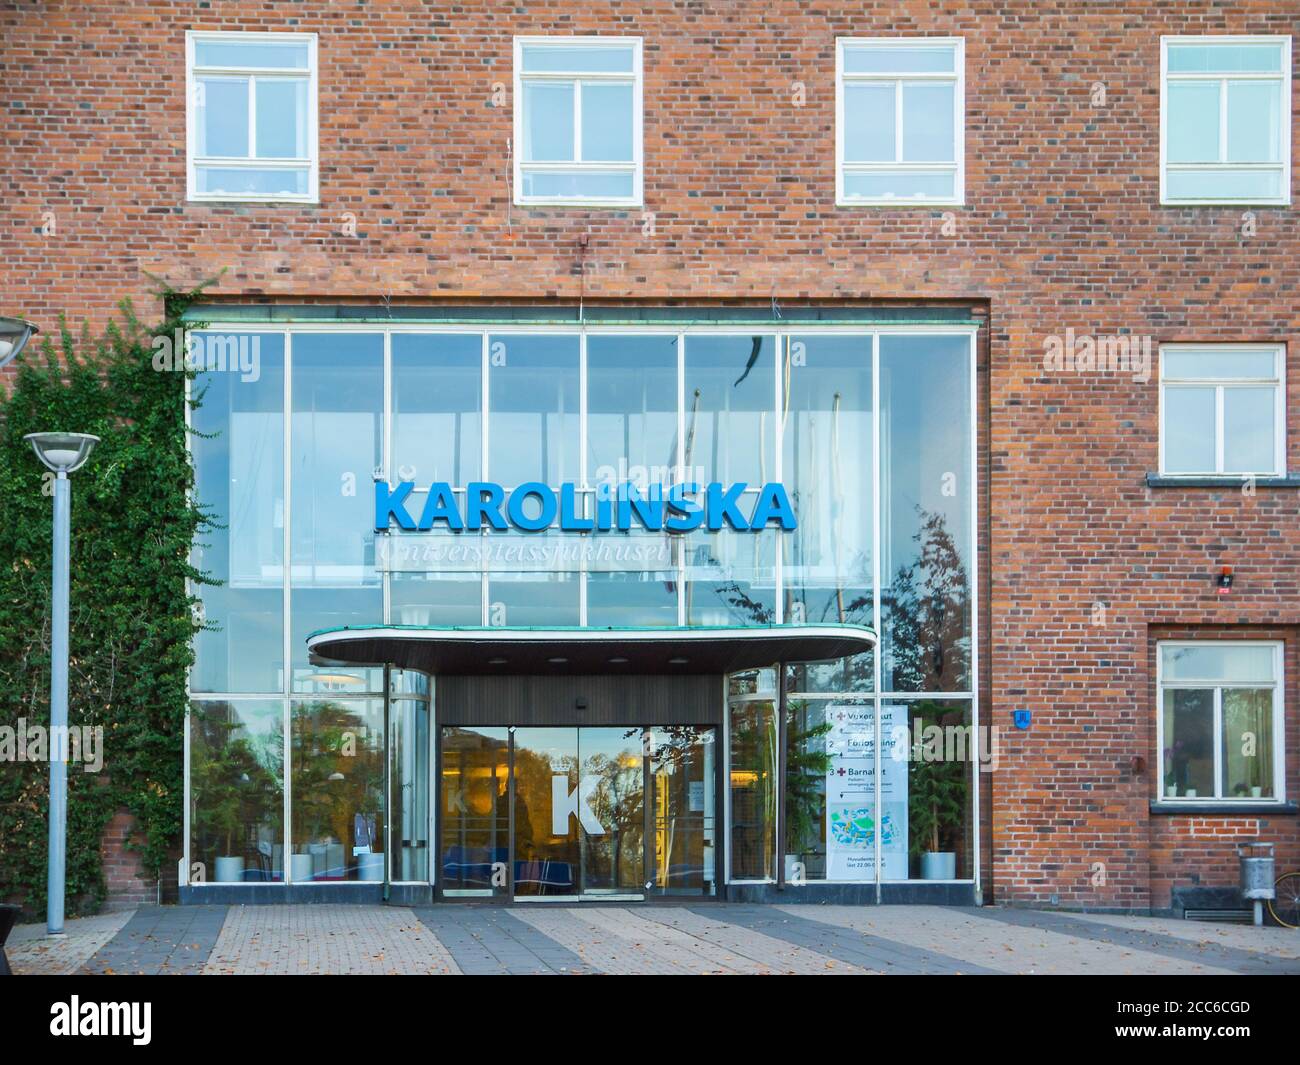 Stockholm, Sweden - October 29, 2011 - The entrance of Karolinska Institute (Royal Caroline Institute) located in Solna within the Stockholm urban are Stock Photo